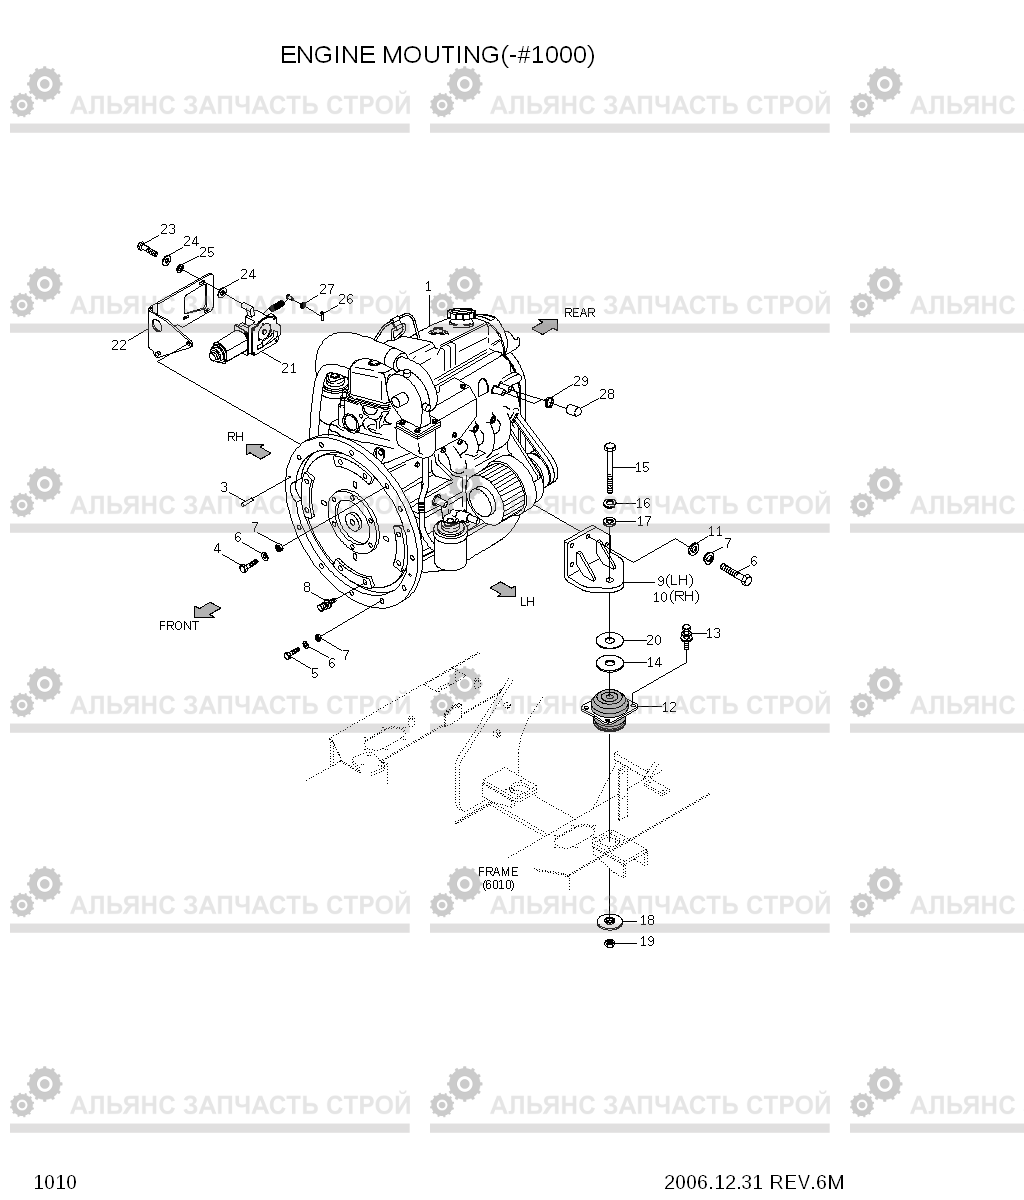 1010 ENGINE MOUNTING(-#1000) 35D/40D/45D-7, Hyundai